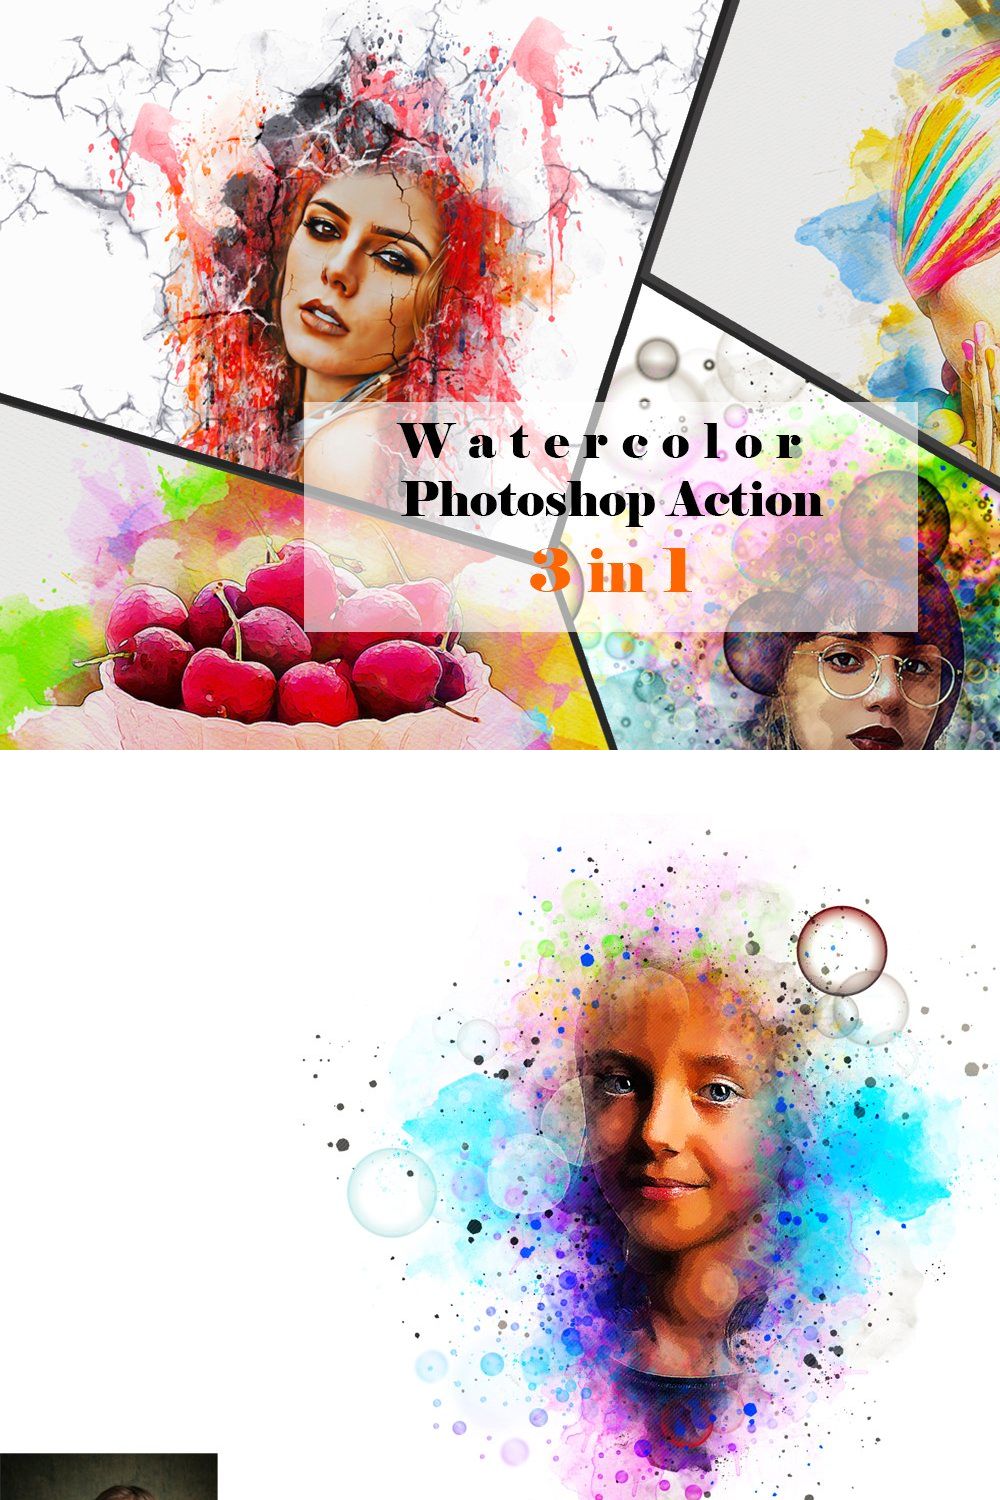 Watercolor Photoshop Action pinterest preview image.